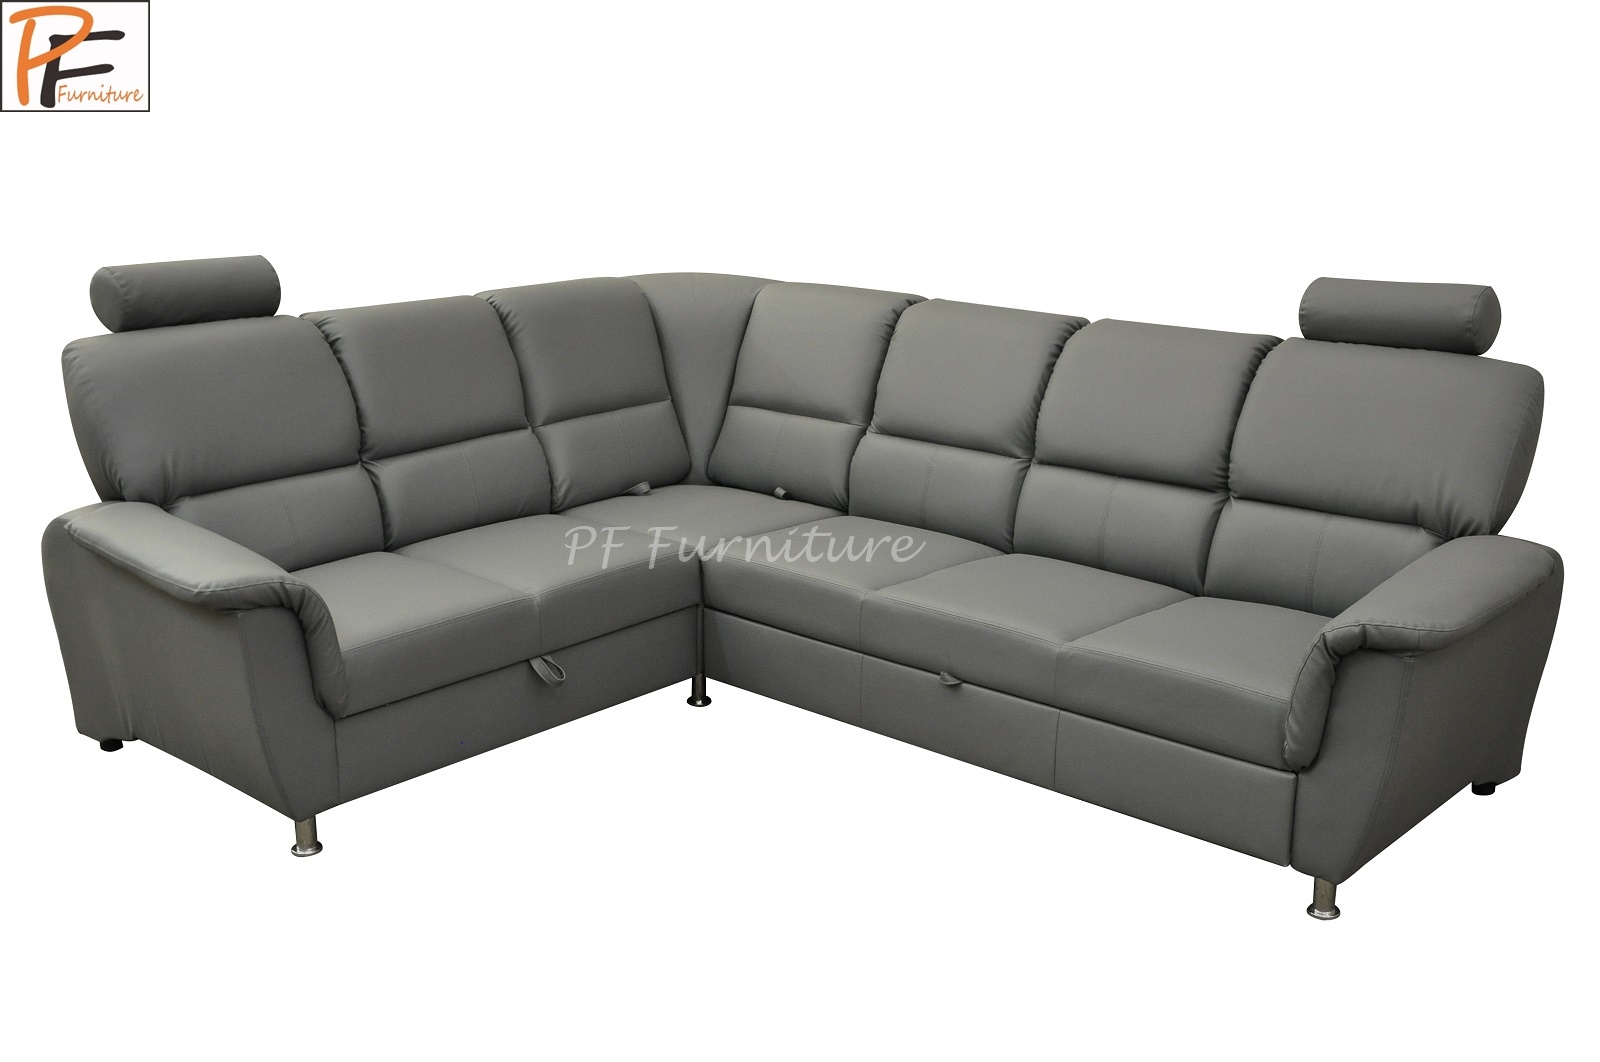 San Diego Corner Sofa Bed Pf Furniture, Leather Sectional San Diego